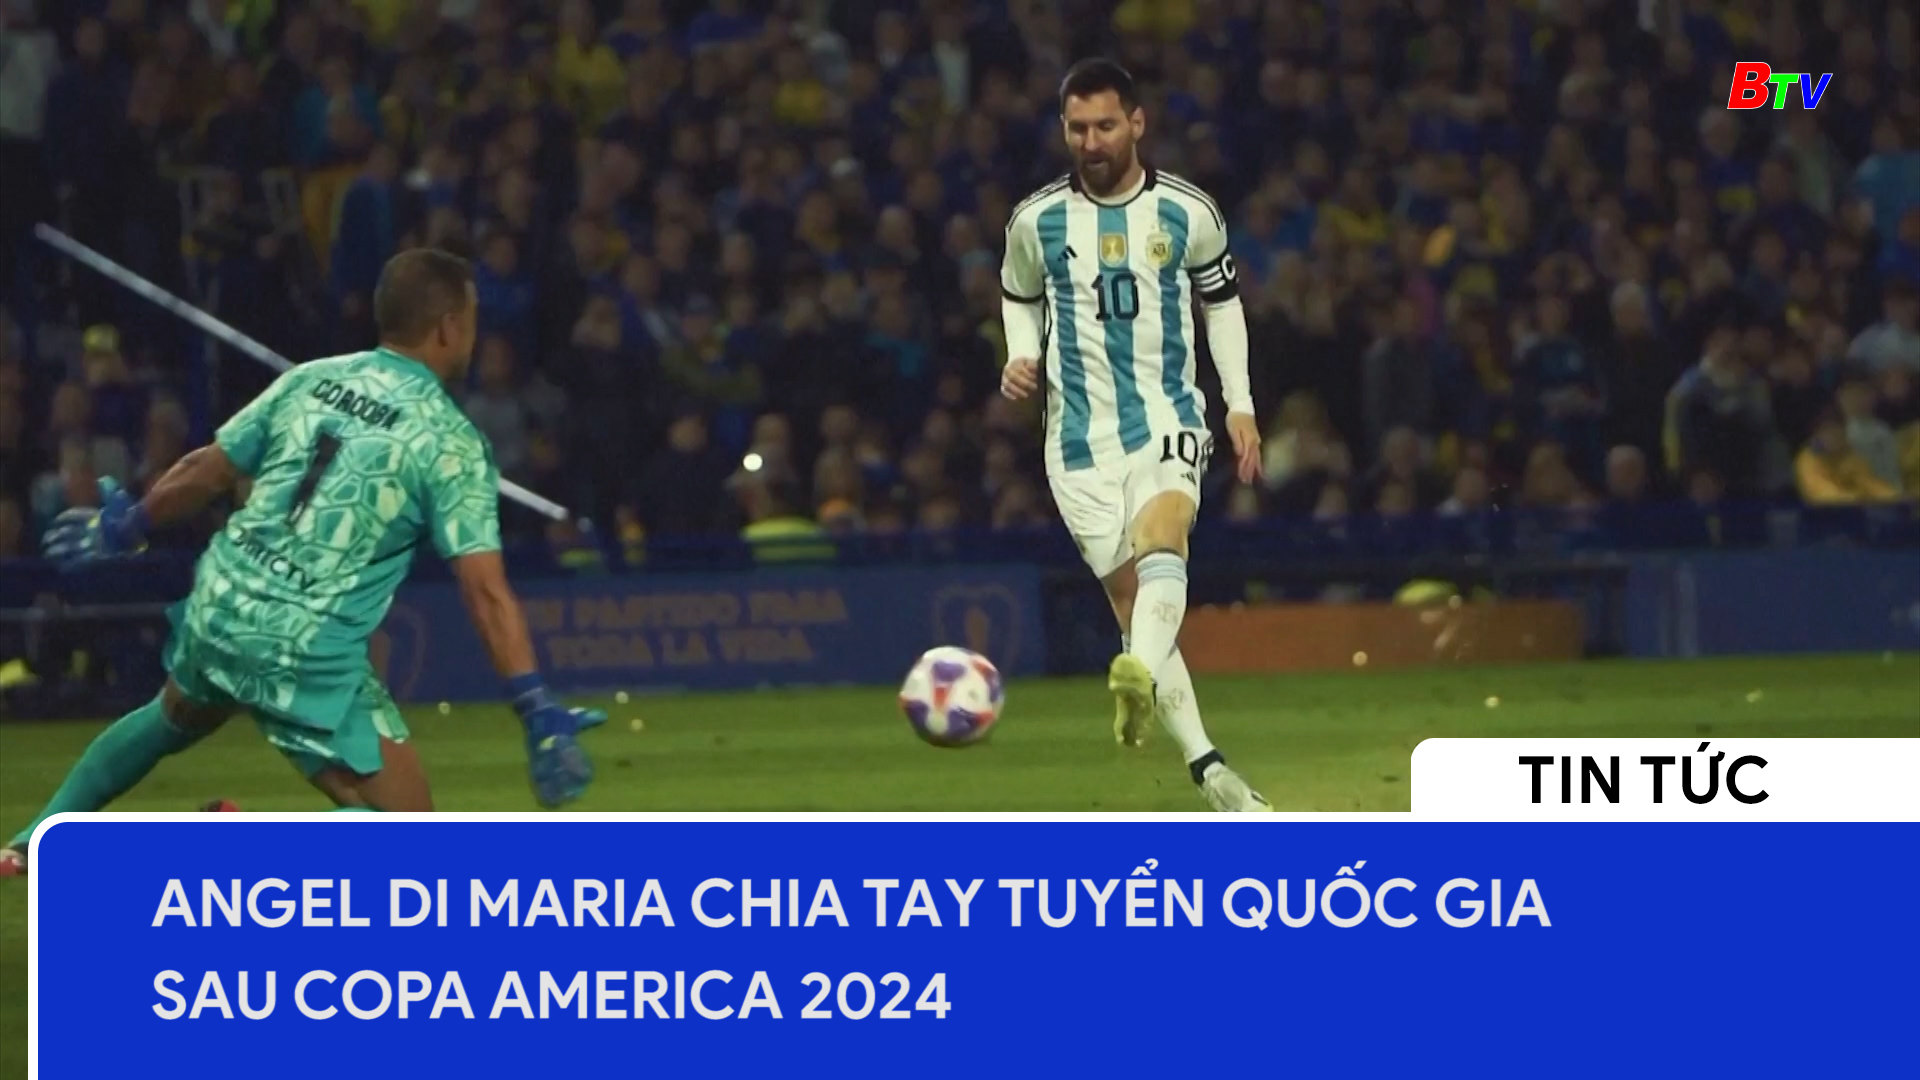 Angel Di Maria chia tay tuyển quốc gia sau Copa America 2024